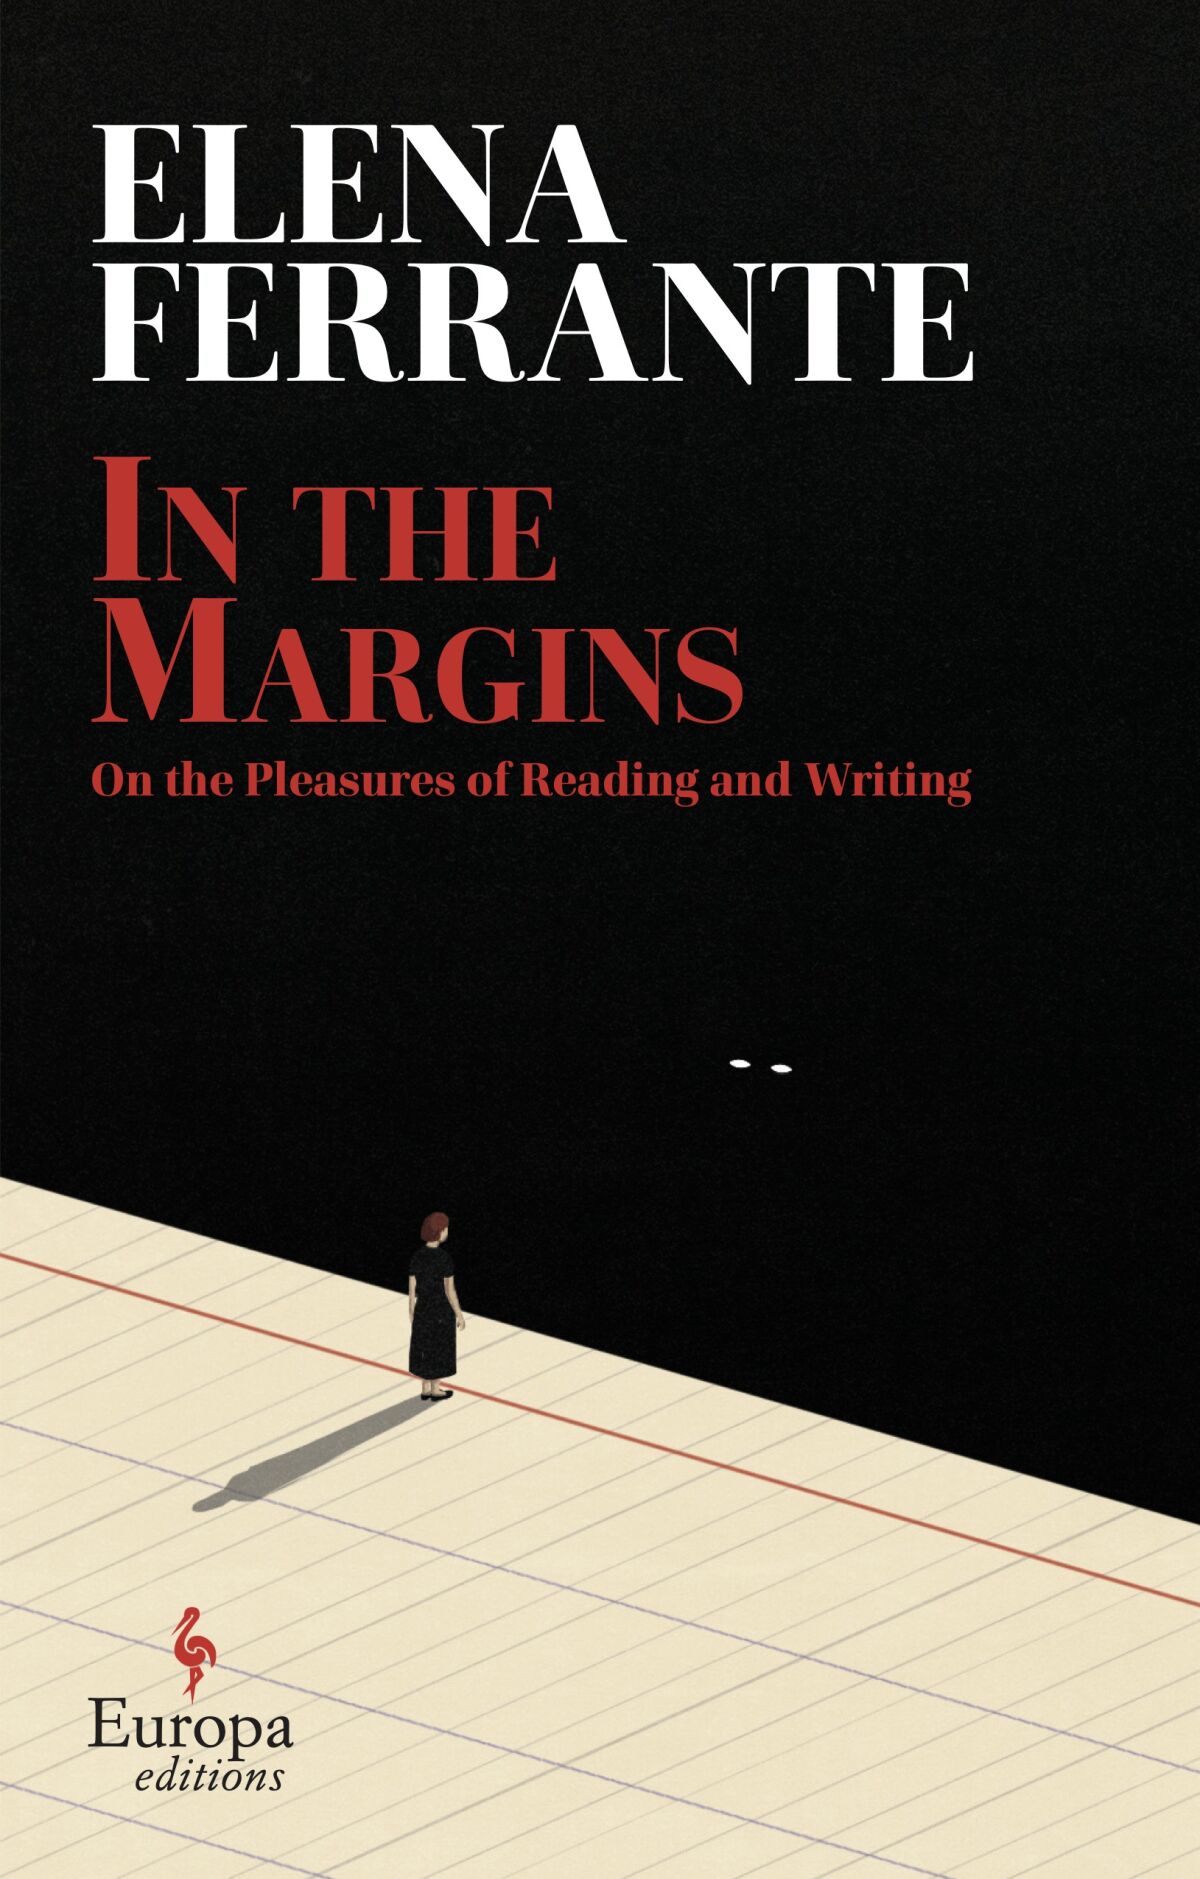 'In the Margins' by Elena Ferrante